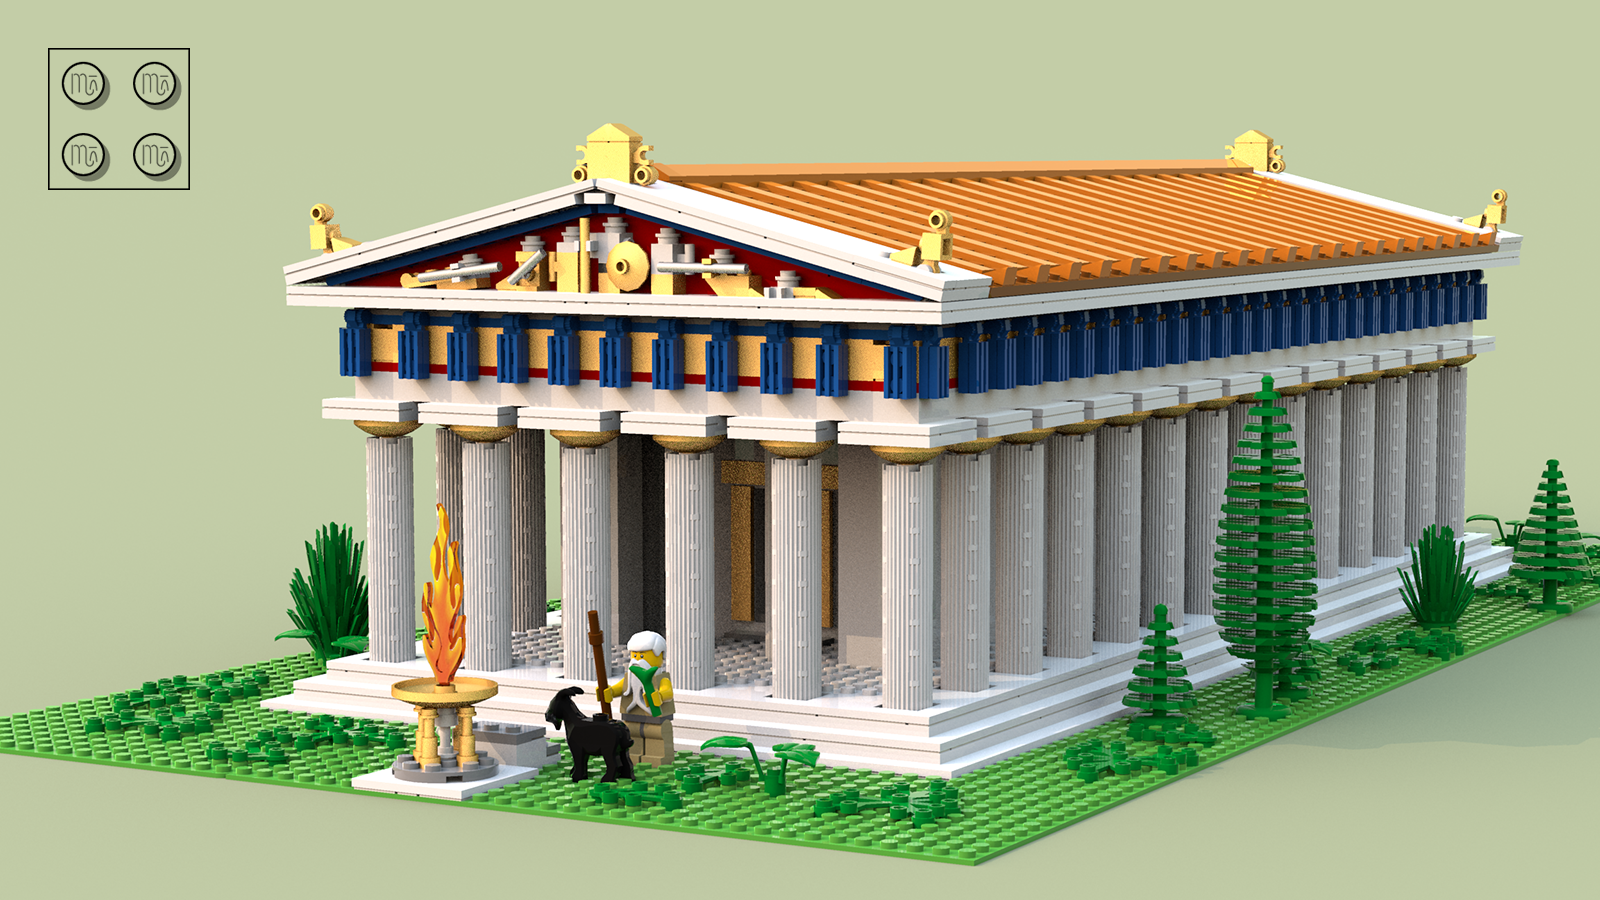 Athens Greece Ancient Hephaes